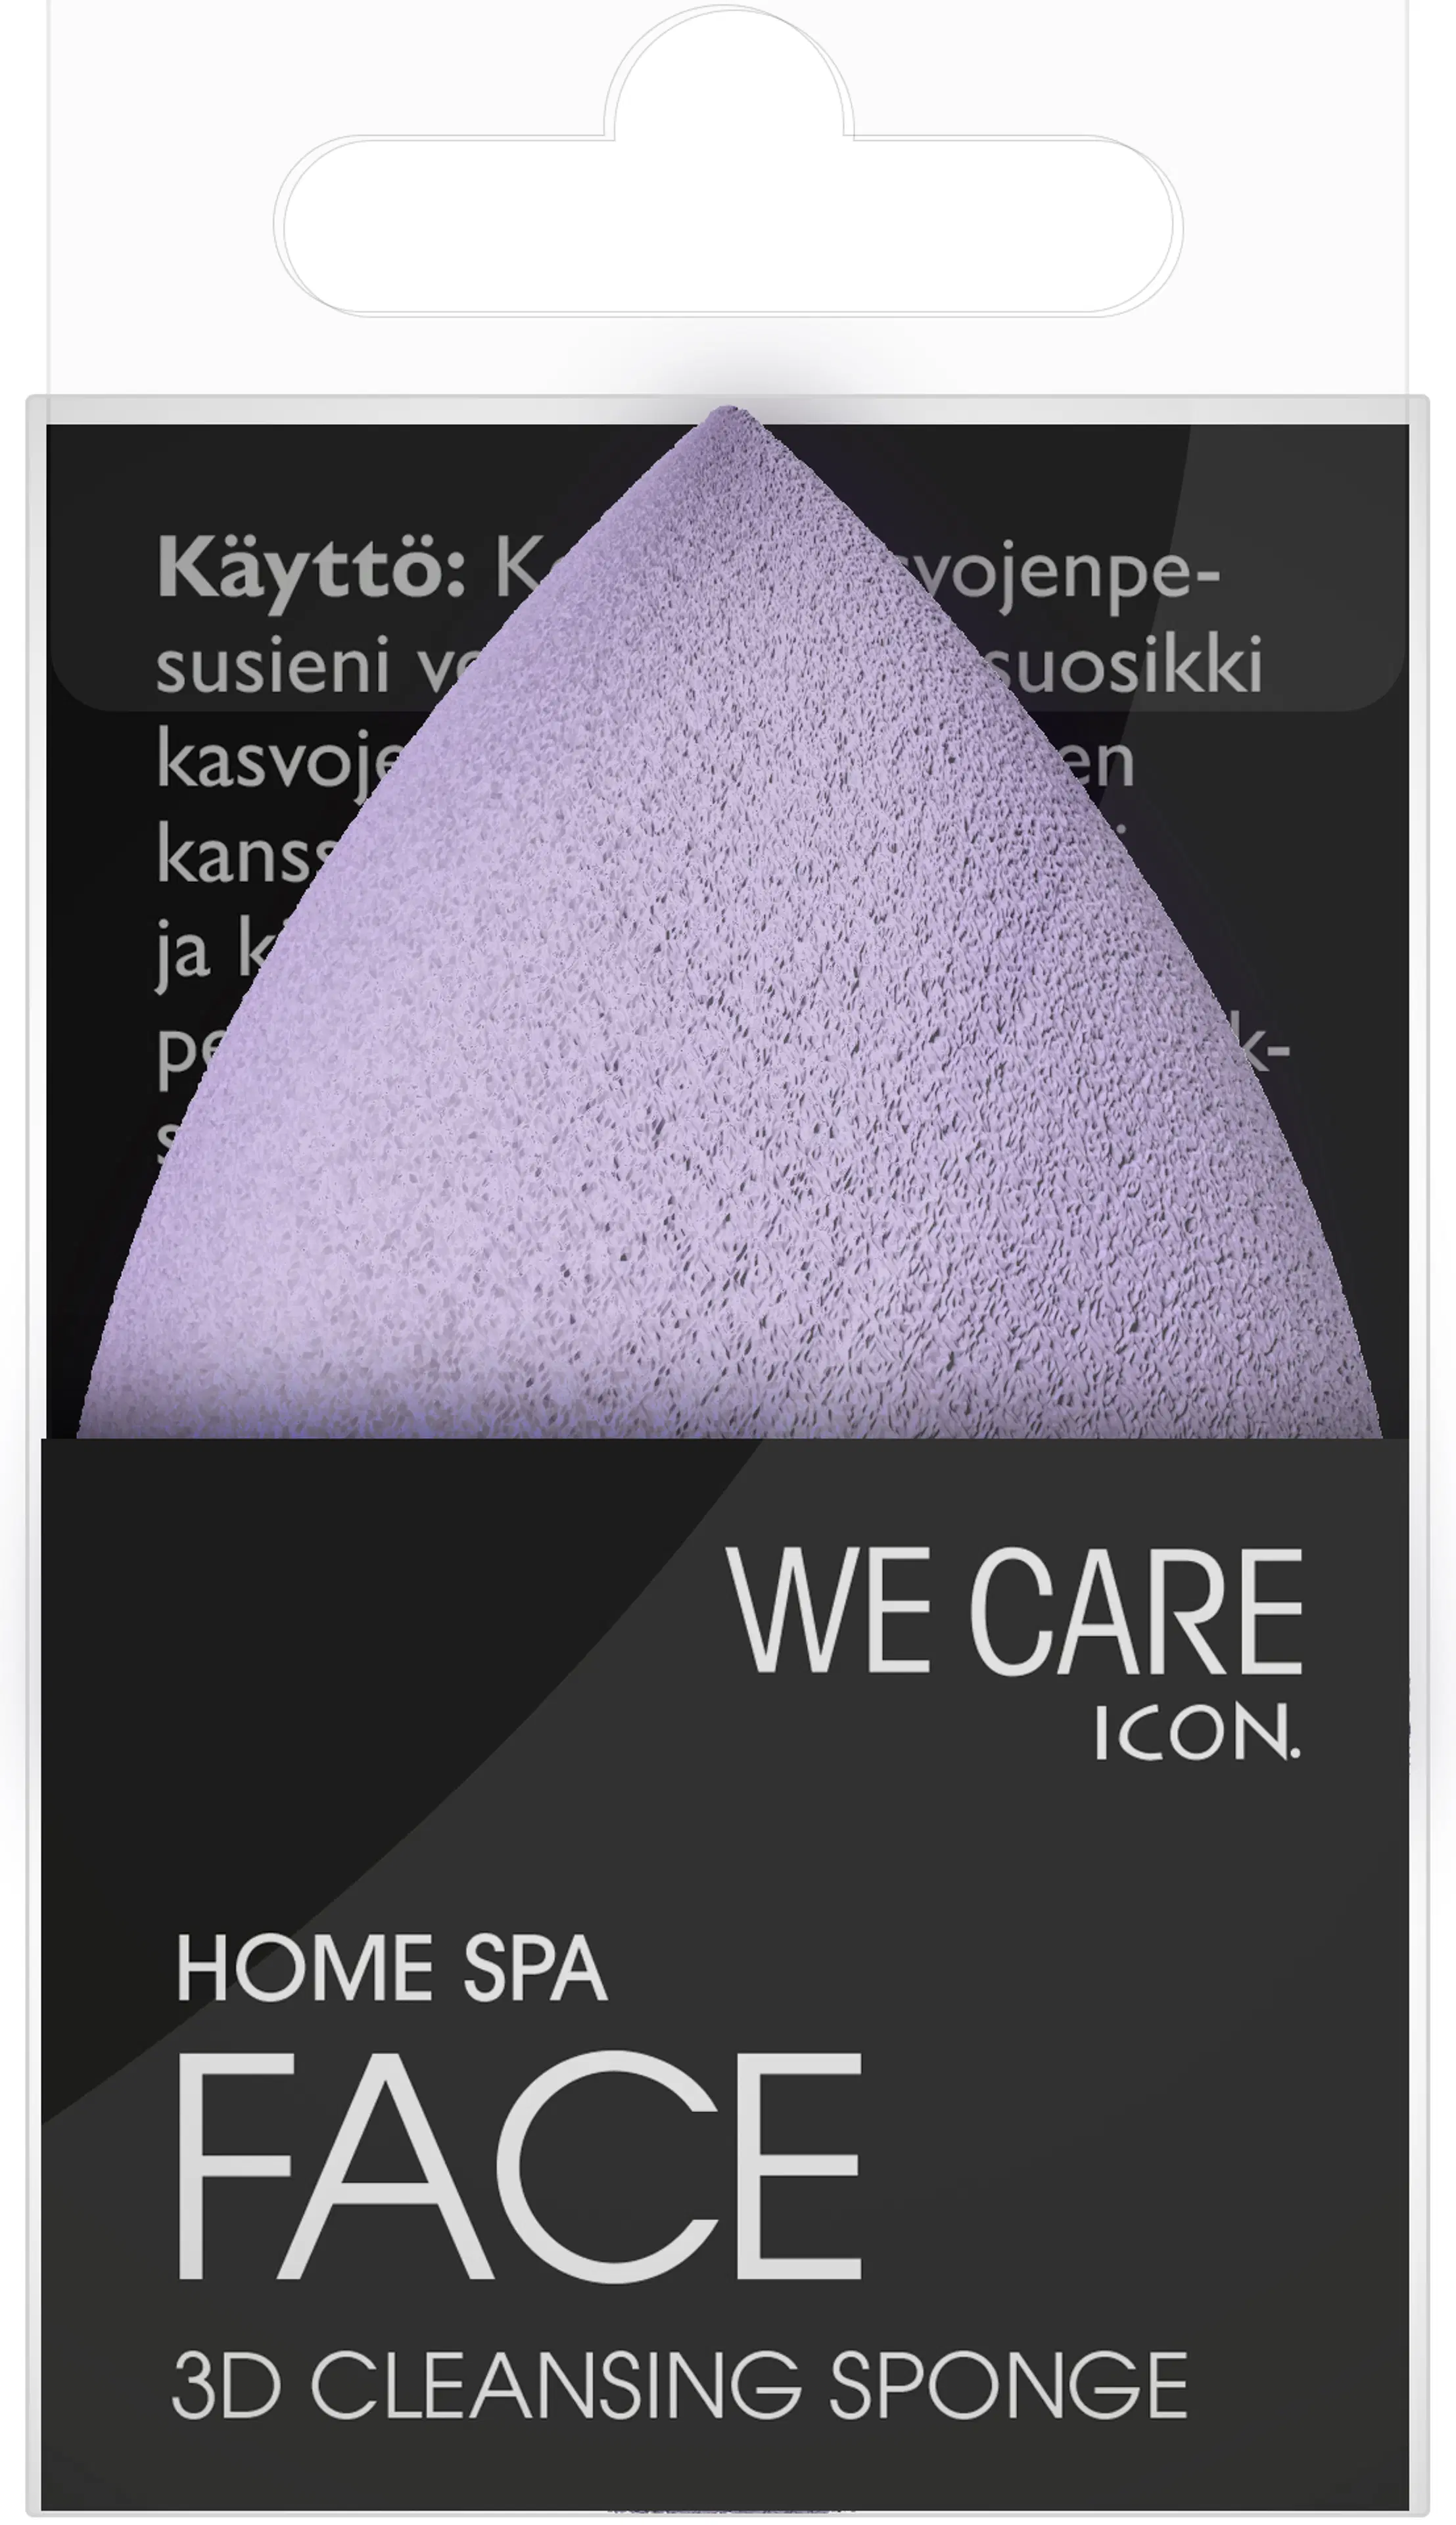 We Care Icon Home Spa Face Cleansing Sponge kasvojenpesusieni